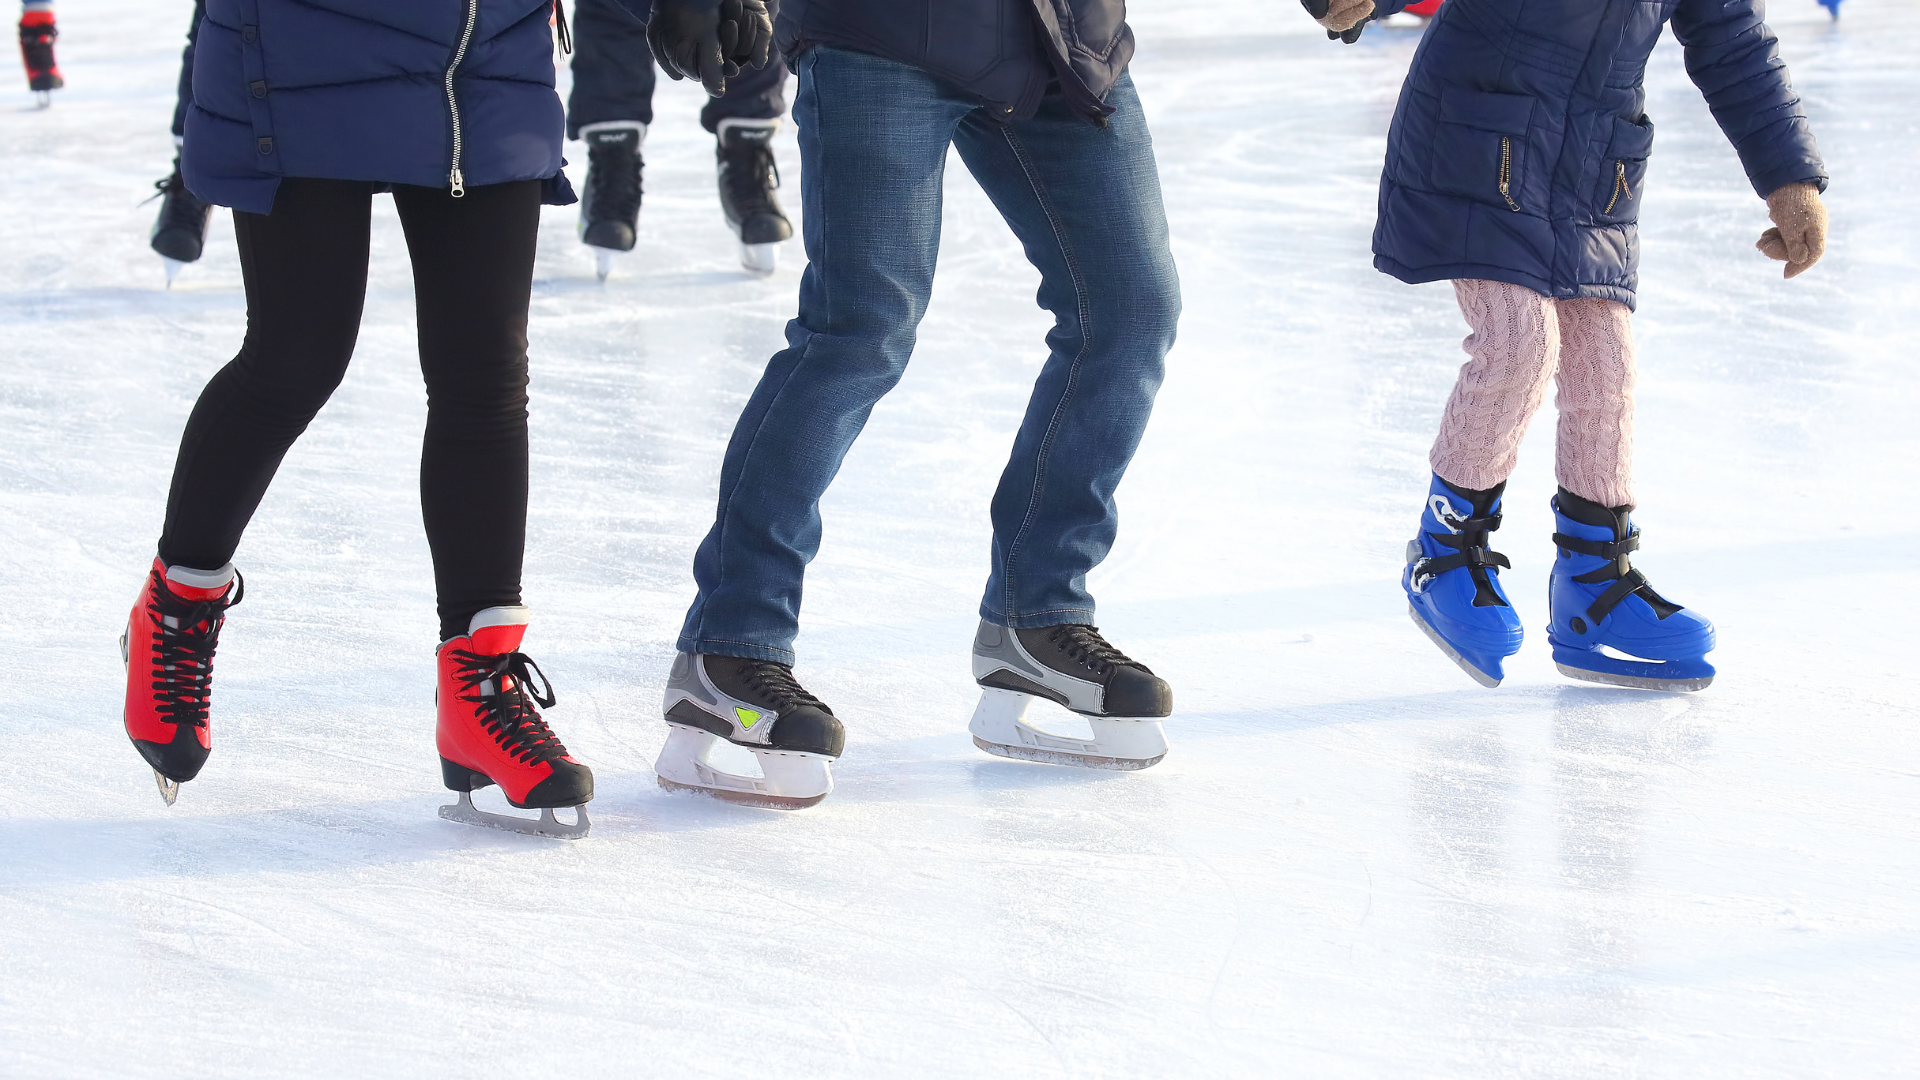 Image: people ice skating